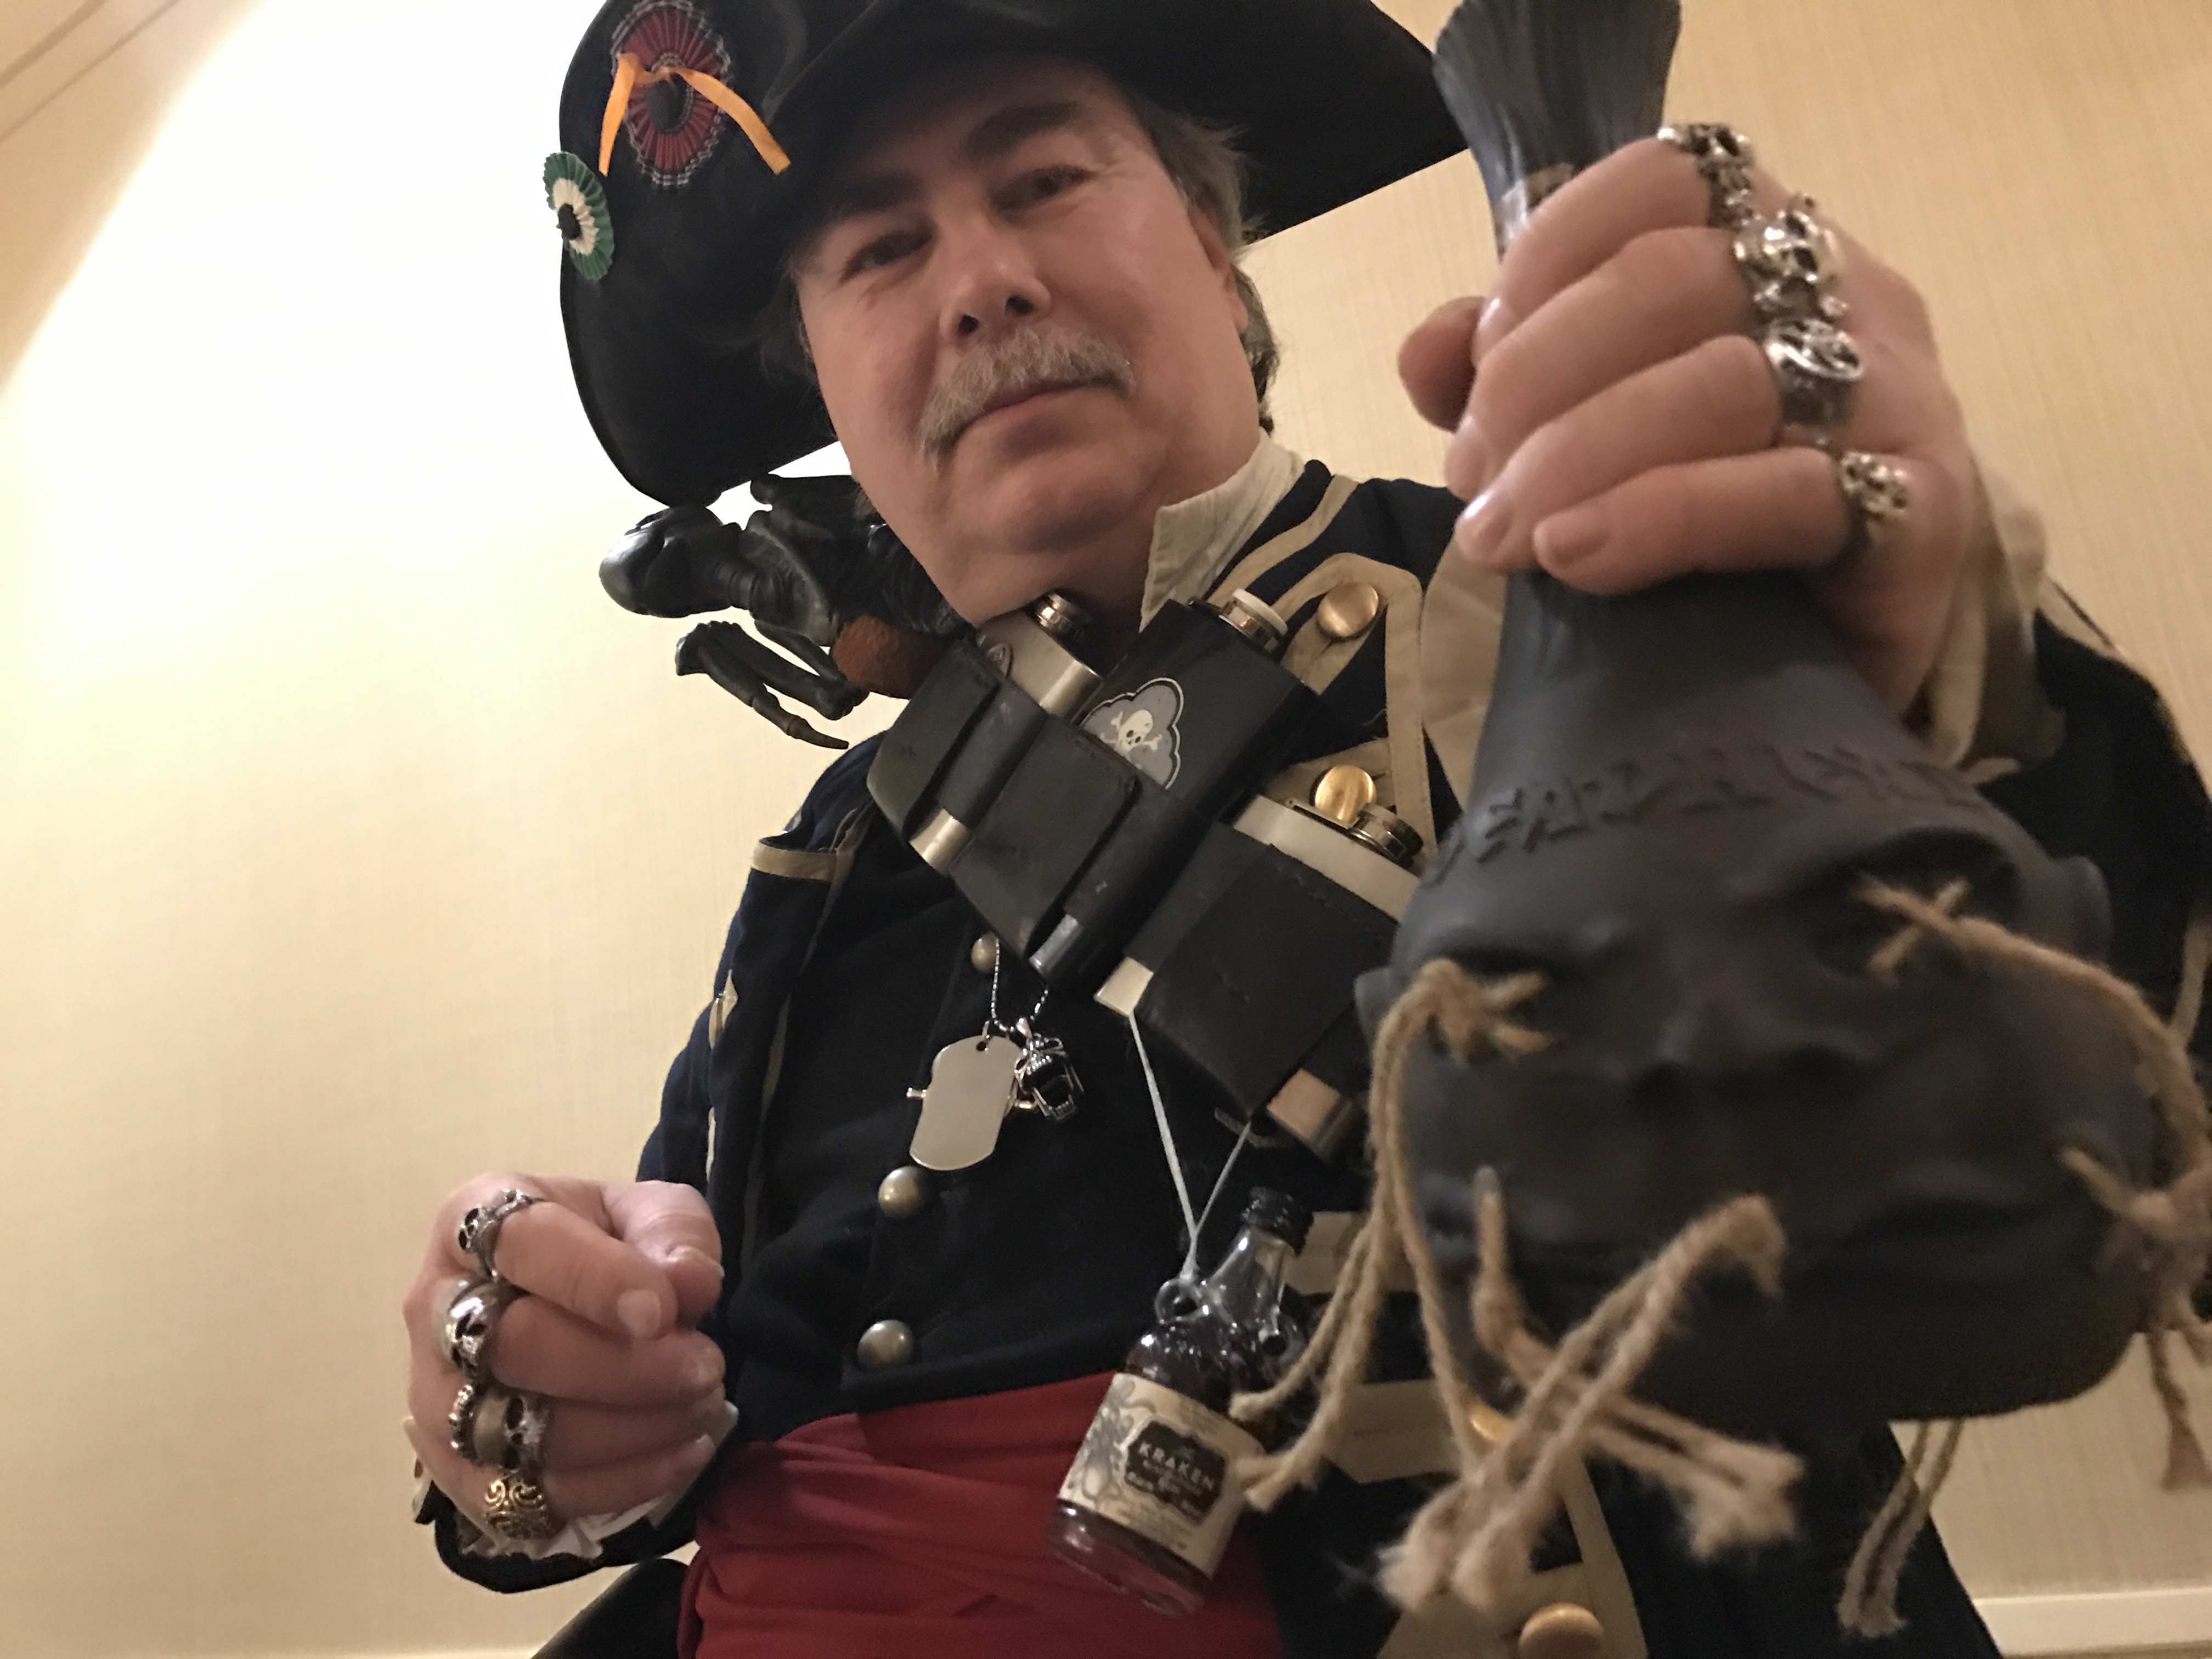 Captain Rumpot with a bottle of Deadhead Rum